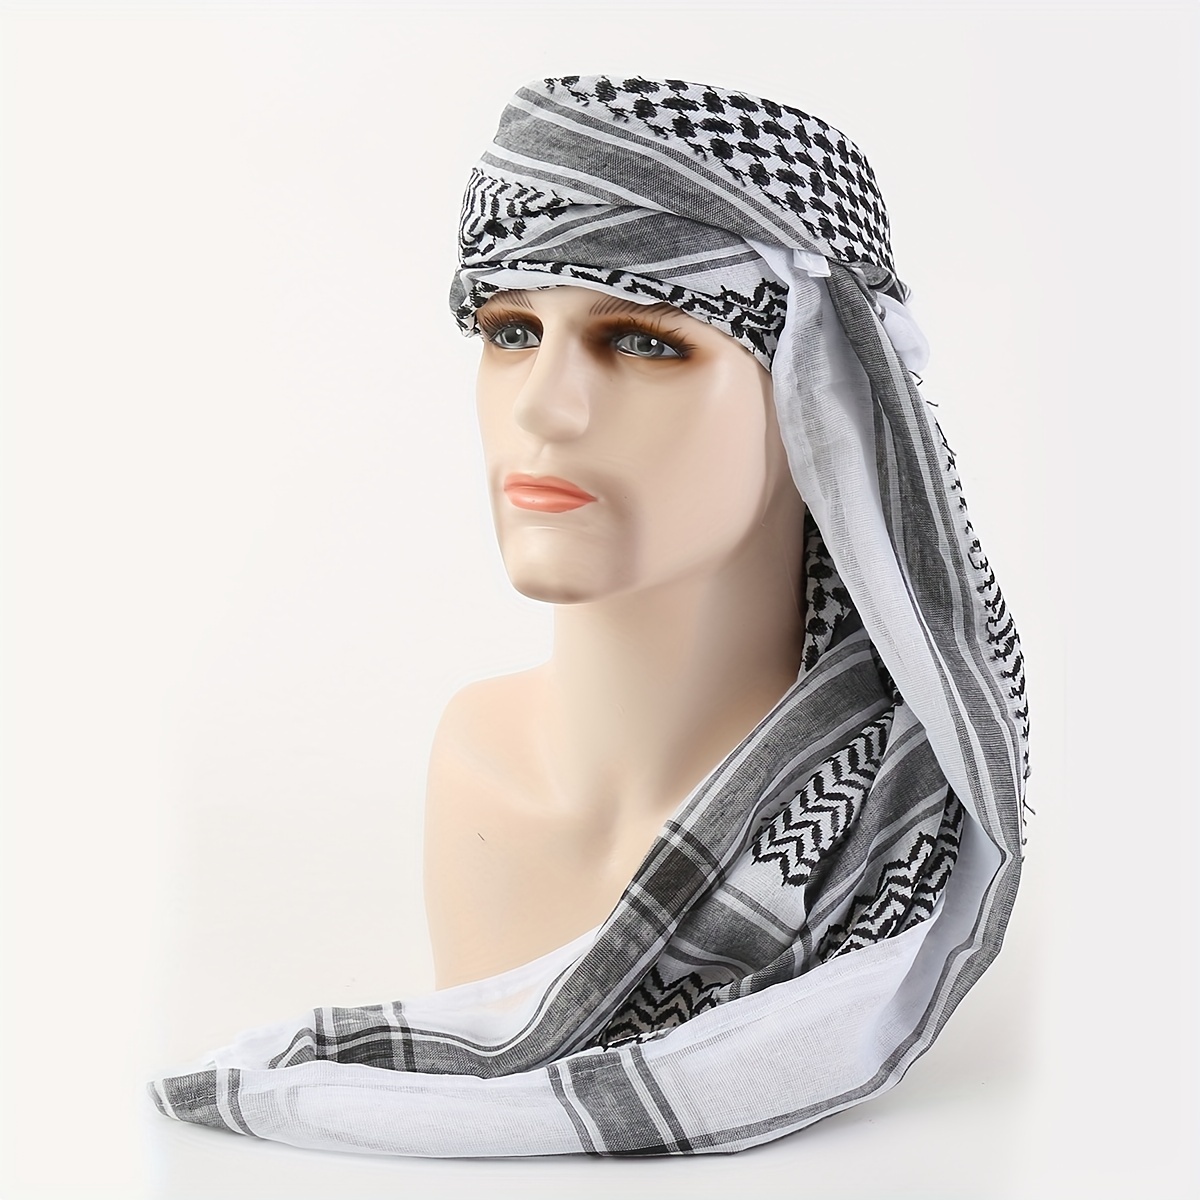 Arab Muslim Men Arabic Scarf Prayer Hats Islamic Clothing Chiffon